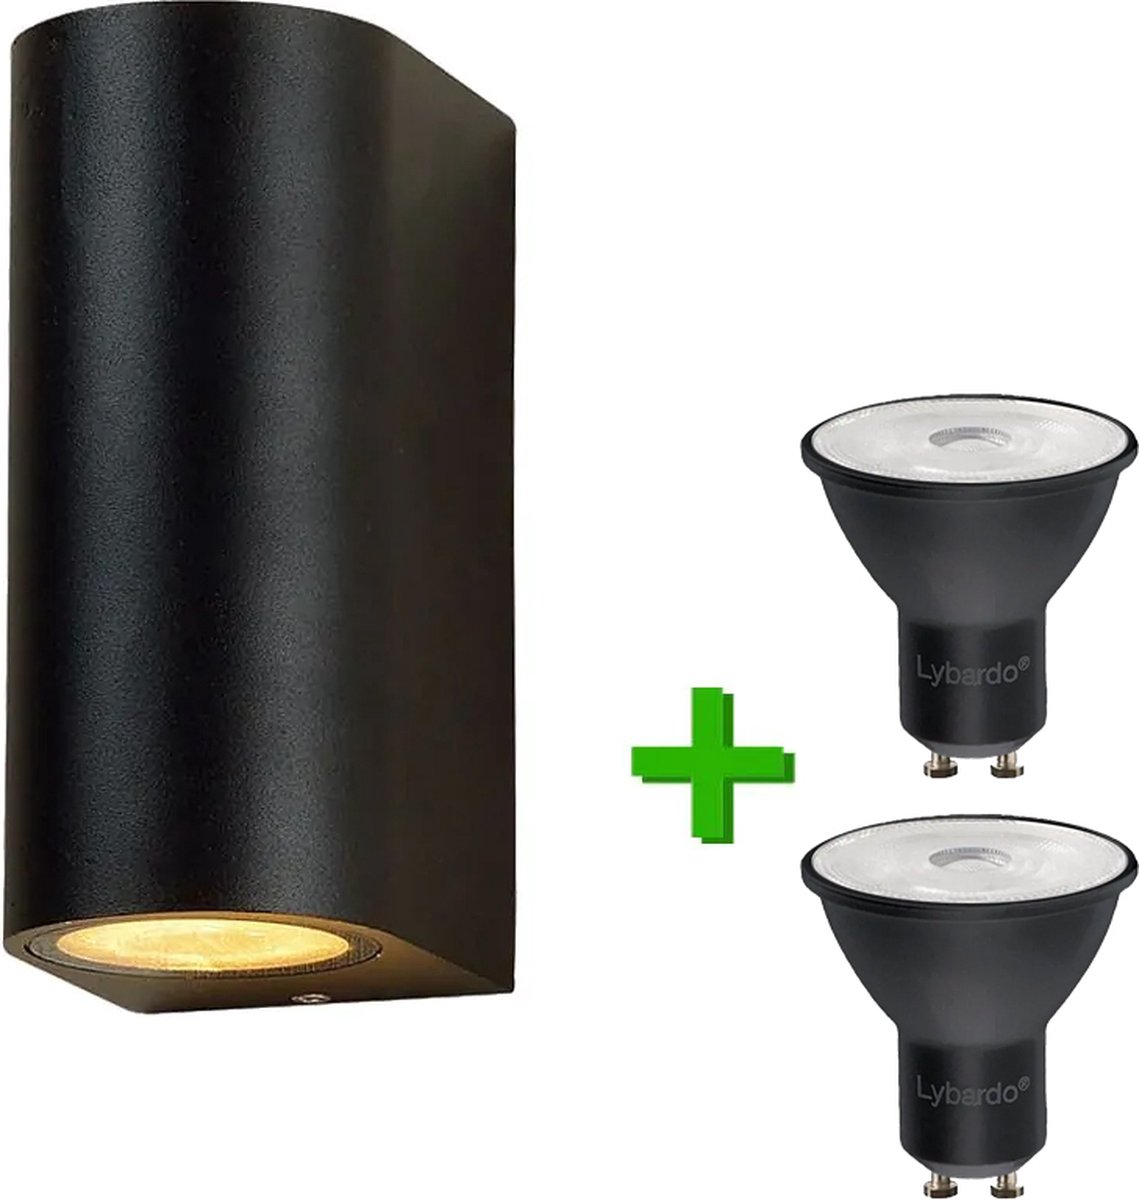 Buitenlamp - Wandlamp buiten - Badkamerlamp - St. Tropez - Zwart - IP54 + 2 x Lybardo GU10 LED spot - 2.4 watt - 2700K warm wit